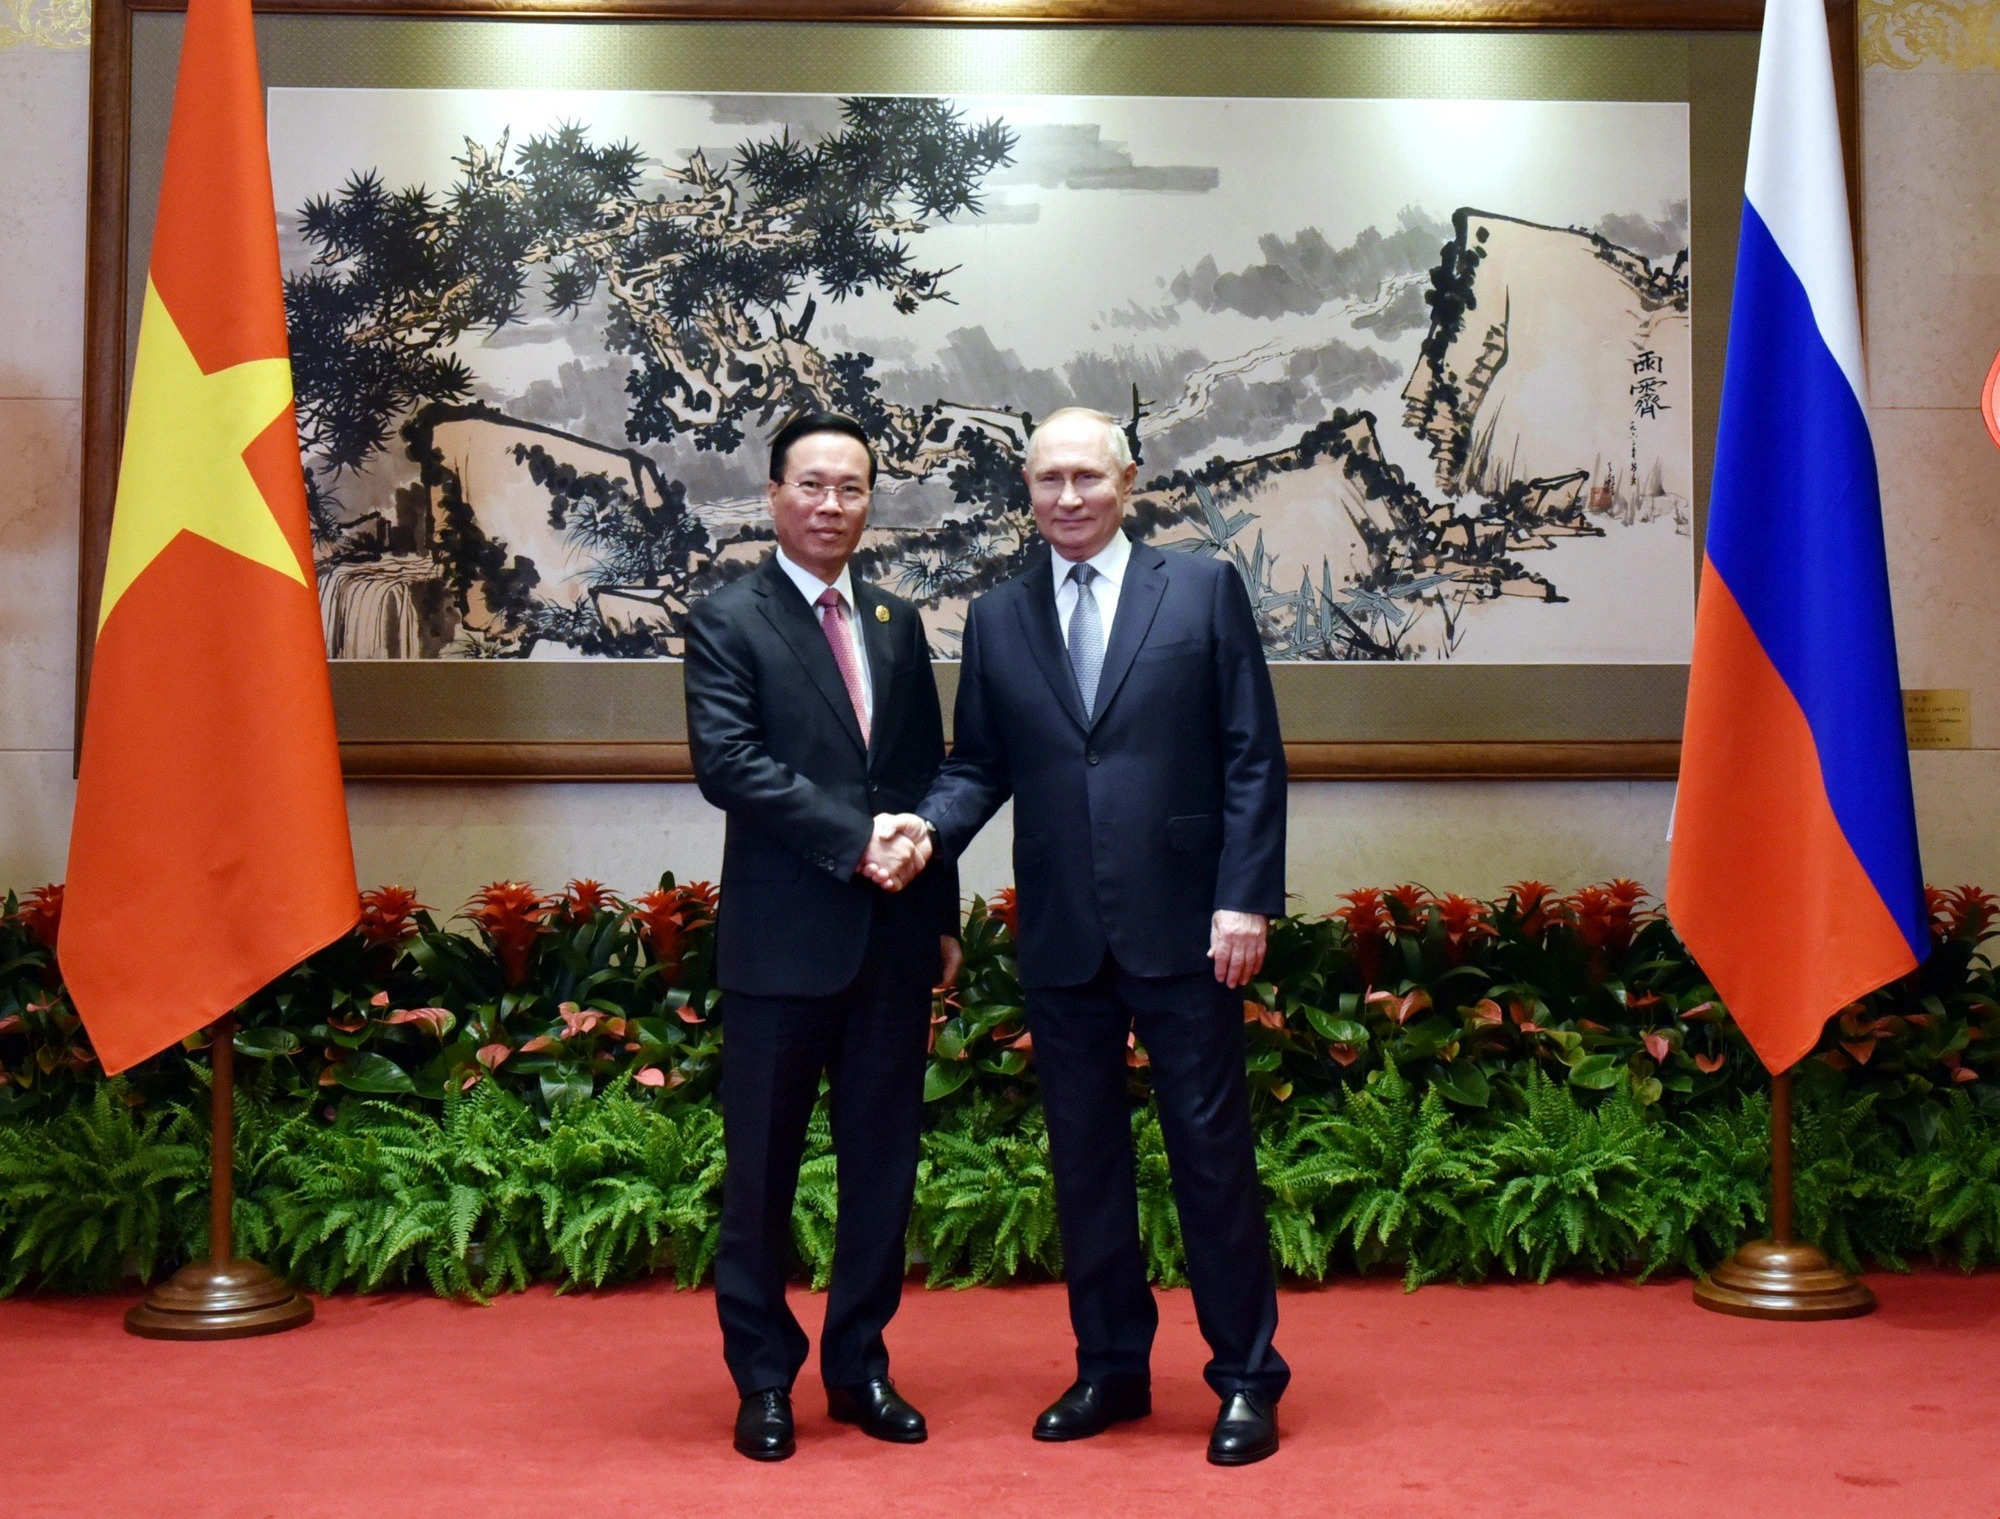 President Vo Van Thuong invites President Vladimir Putin to visit Vietnam